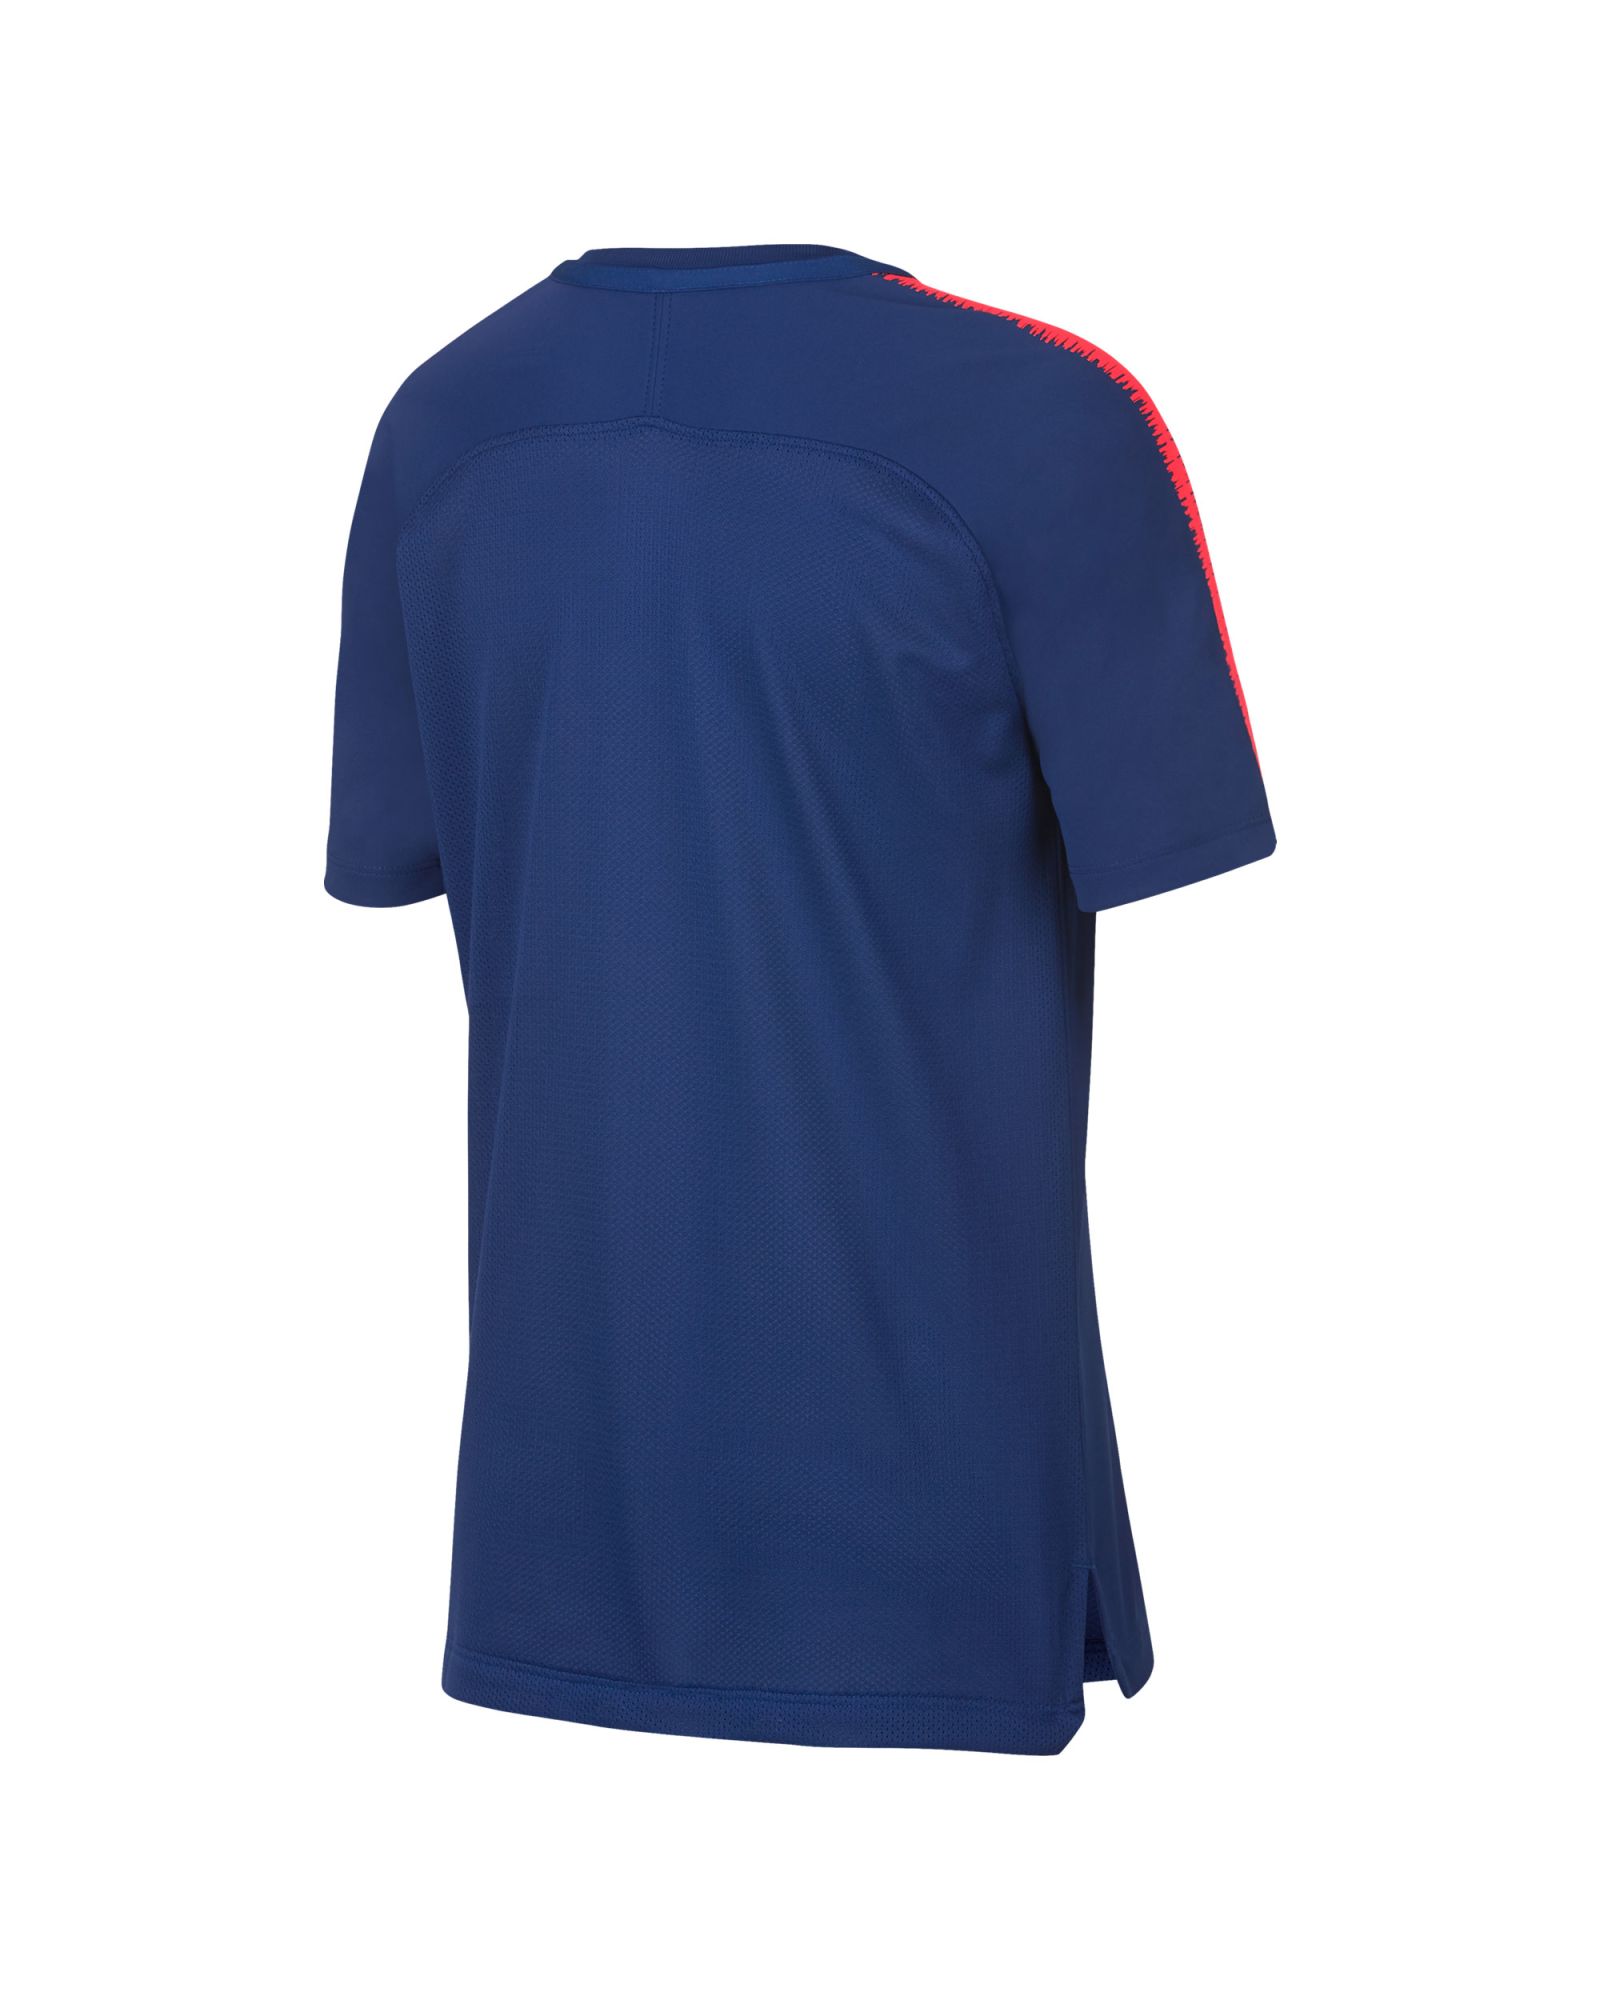 Camiseta de Training Atlético de Madrid Breathe Squad 2018/2019 Junior Azul Rojo - Fútbol Factory